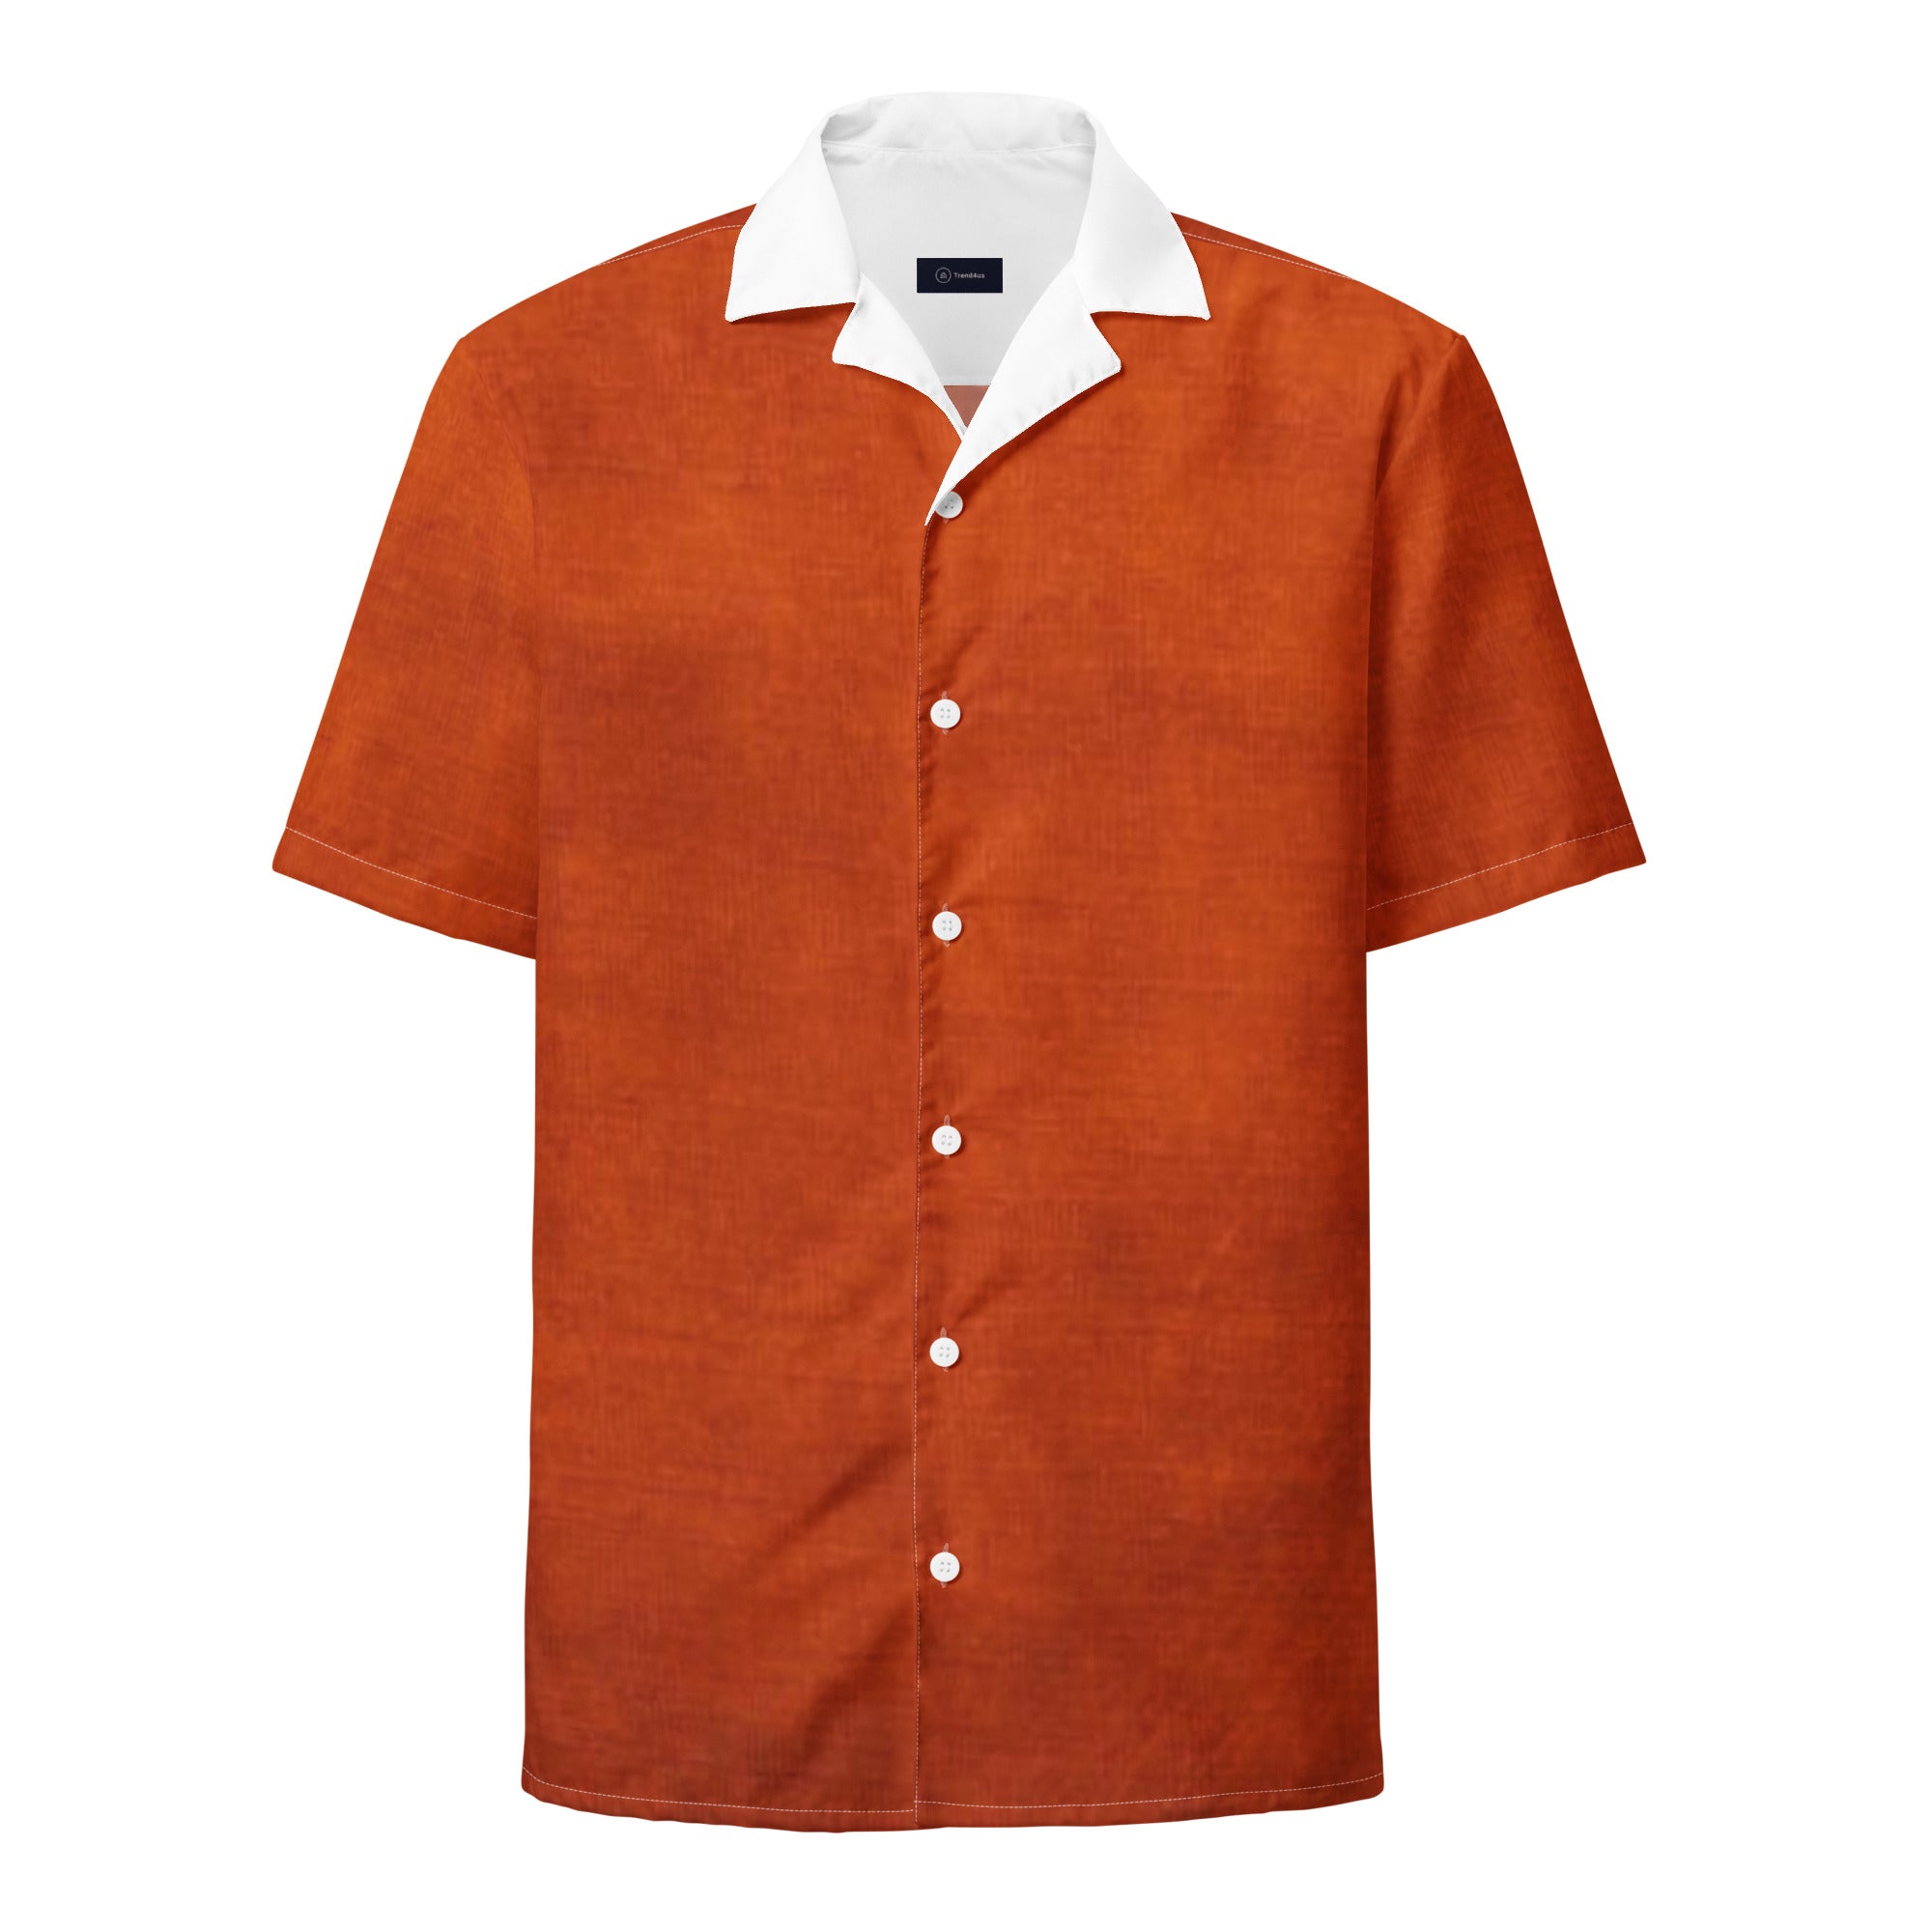 Trend4us Unisex Button Shirt